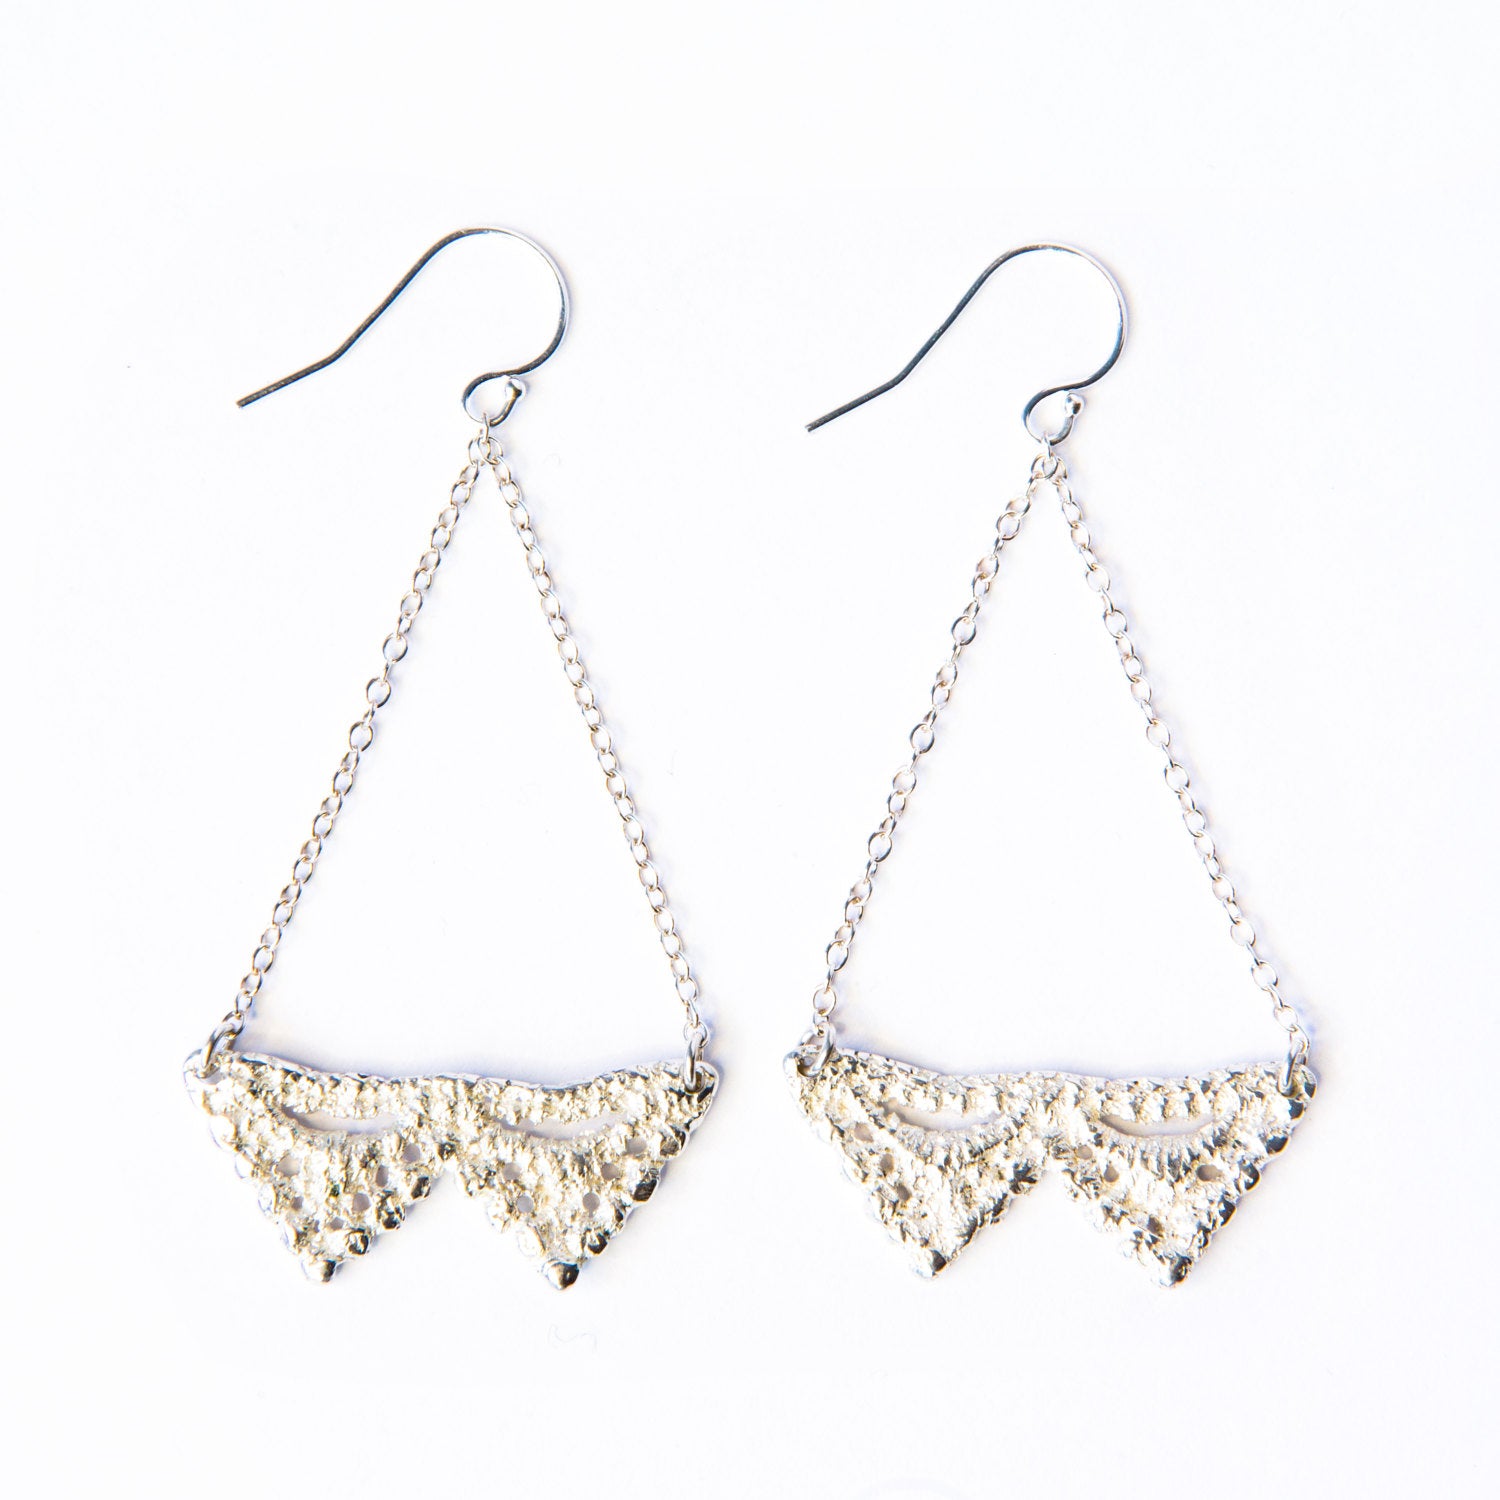 Lace double Pyramid chandelier Earrings in sterling silver